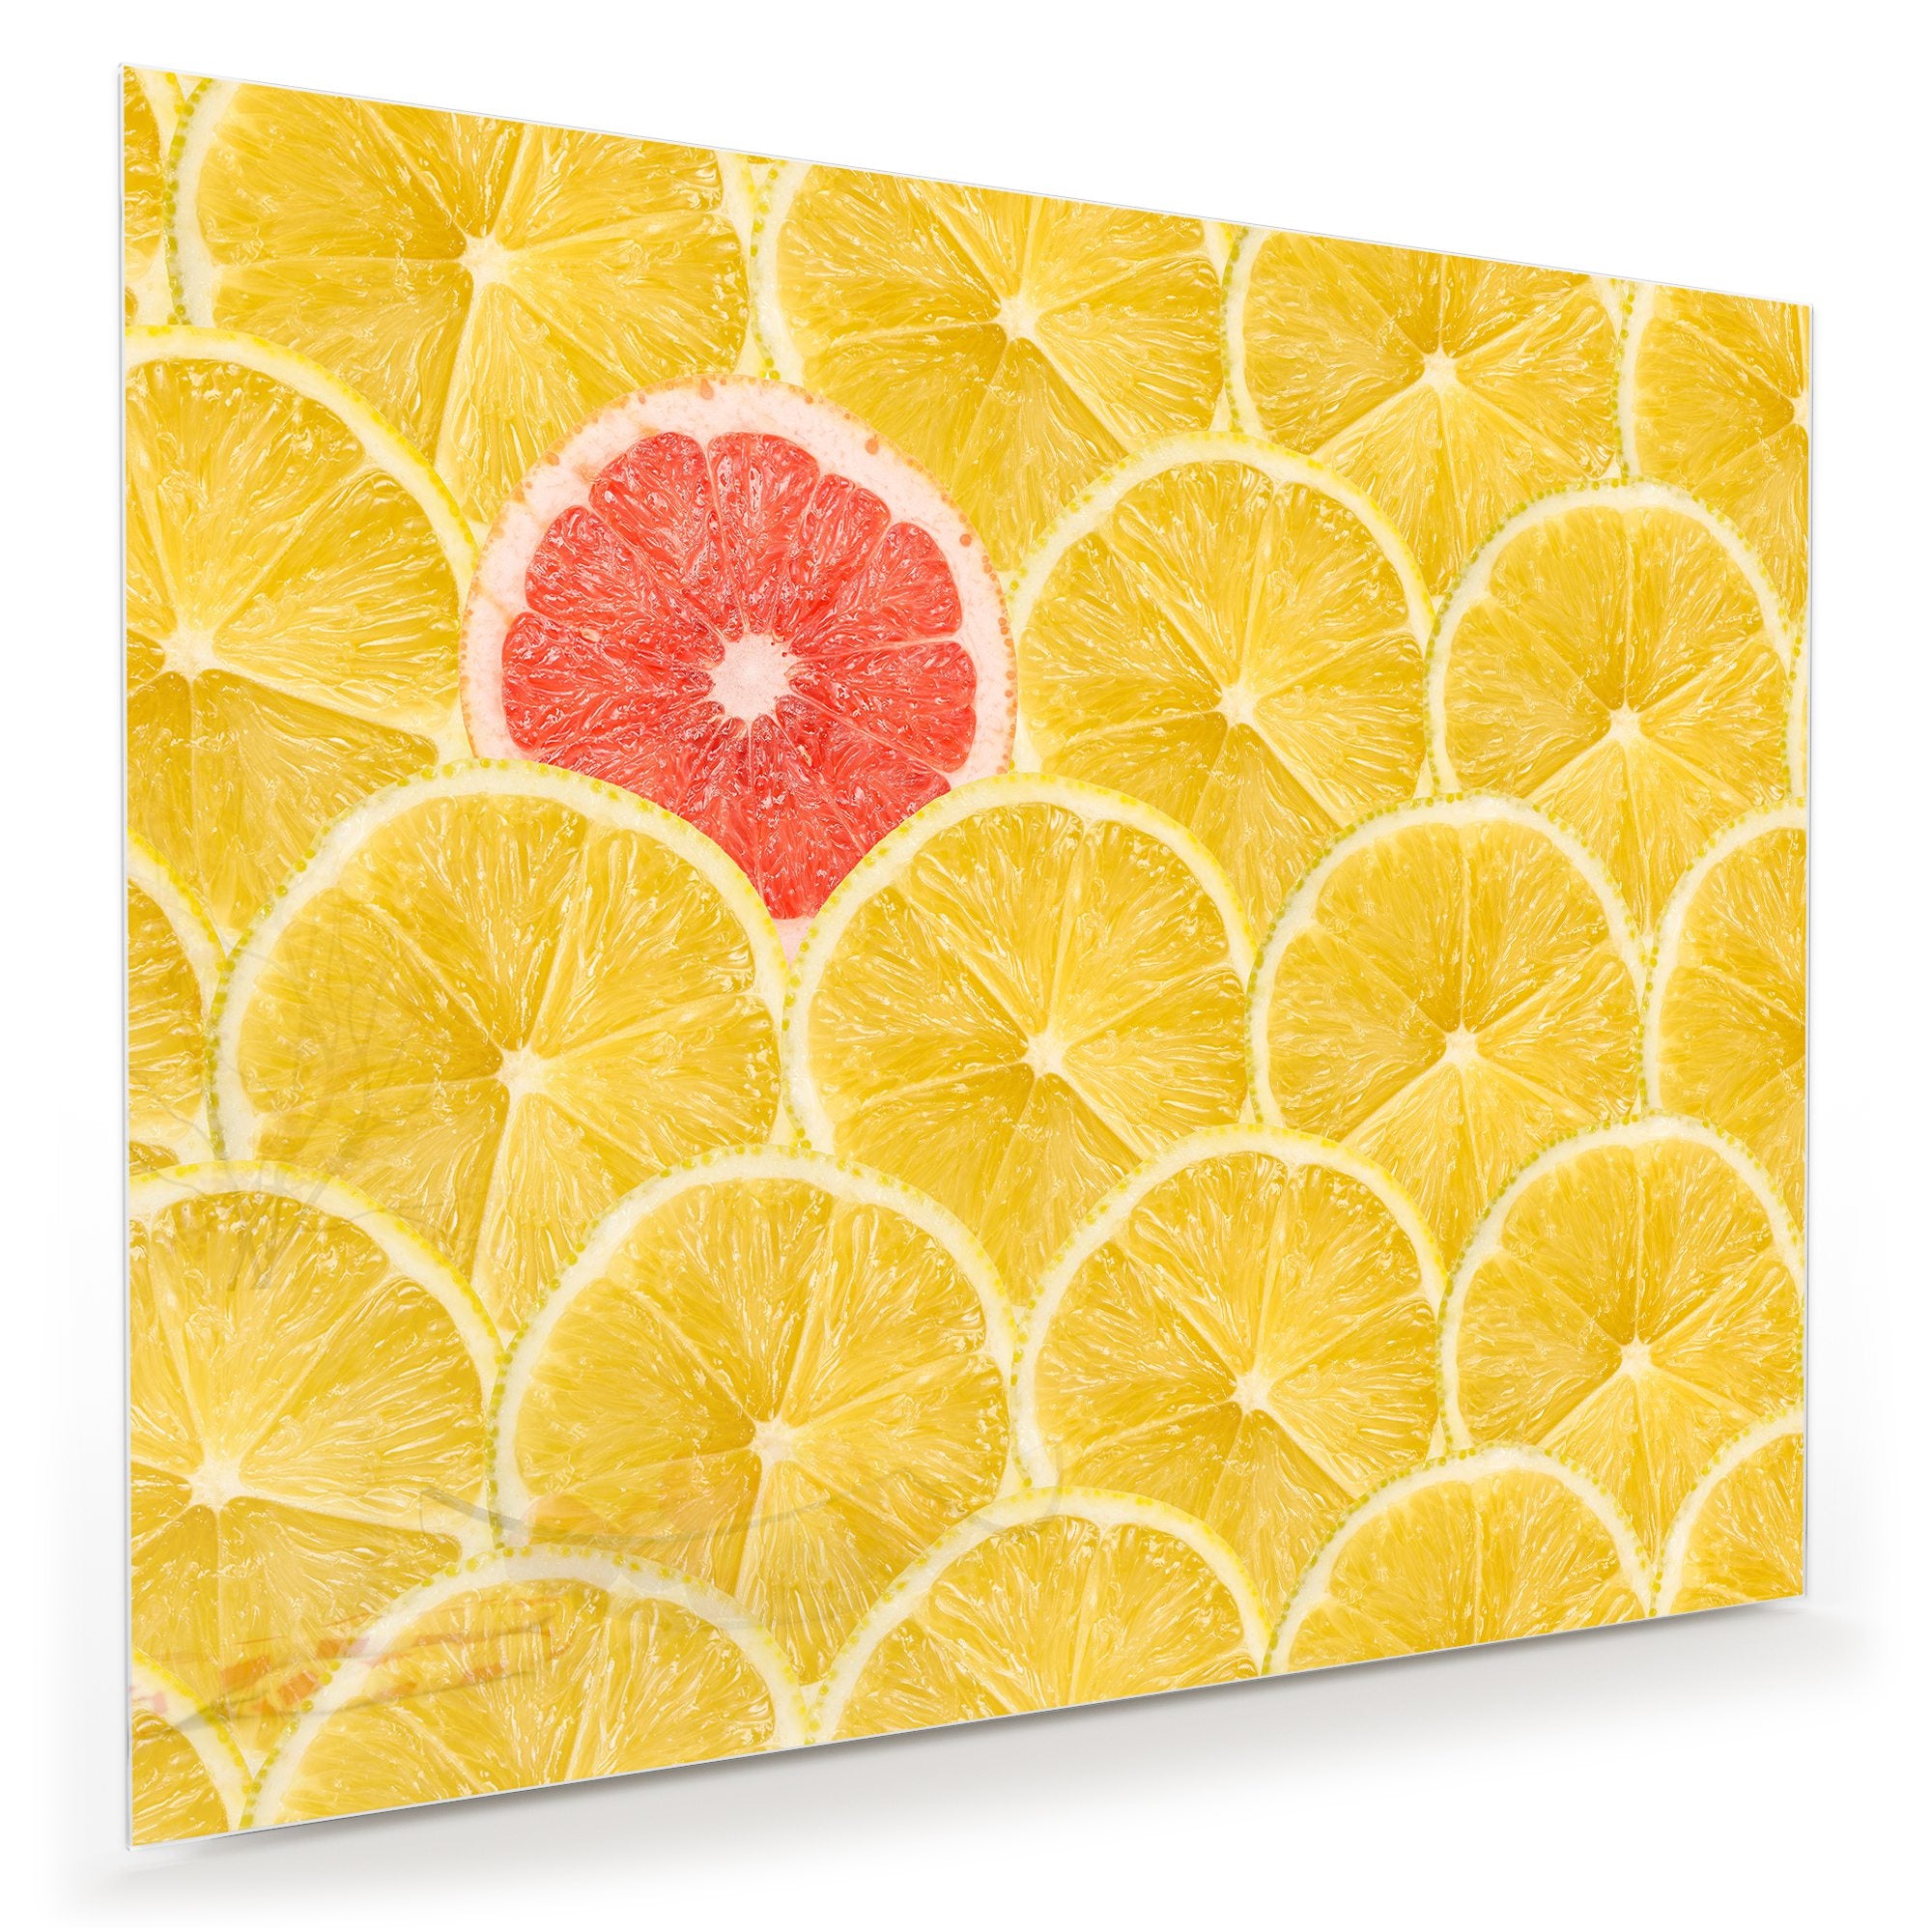 Wandbild - Scheiben aus Zitronen